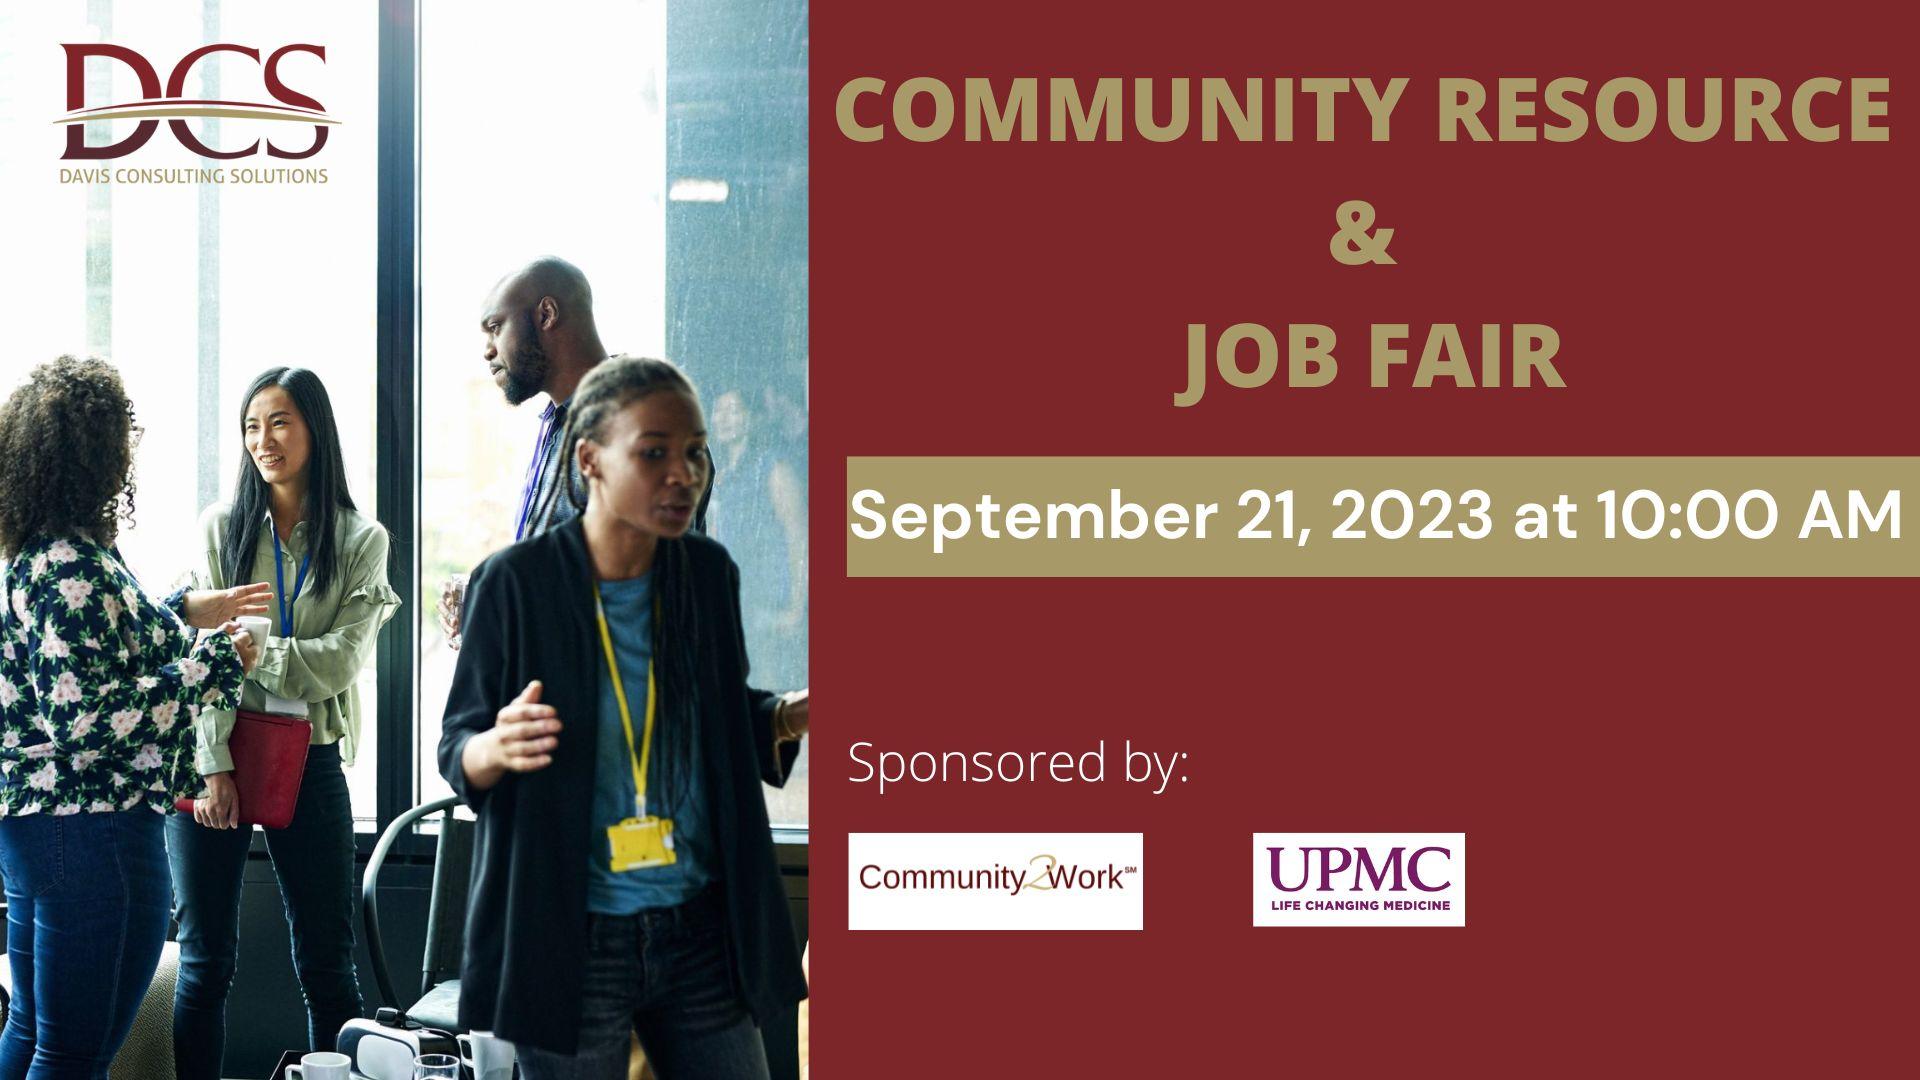 Community Resource and Job Fair